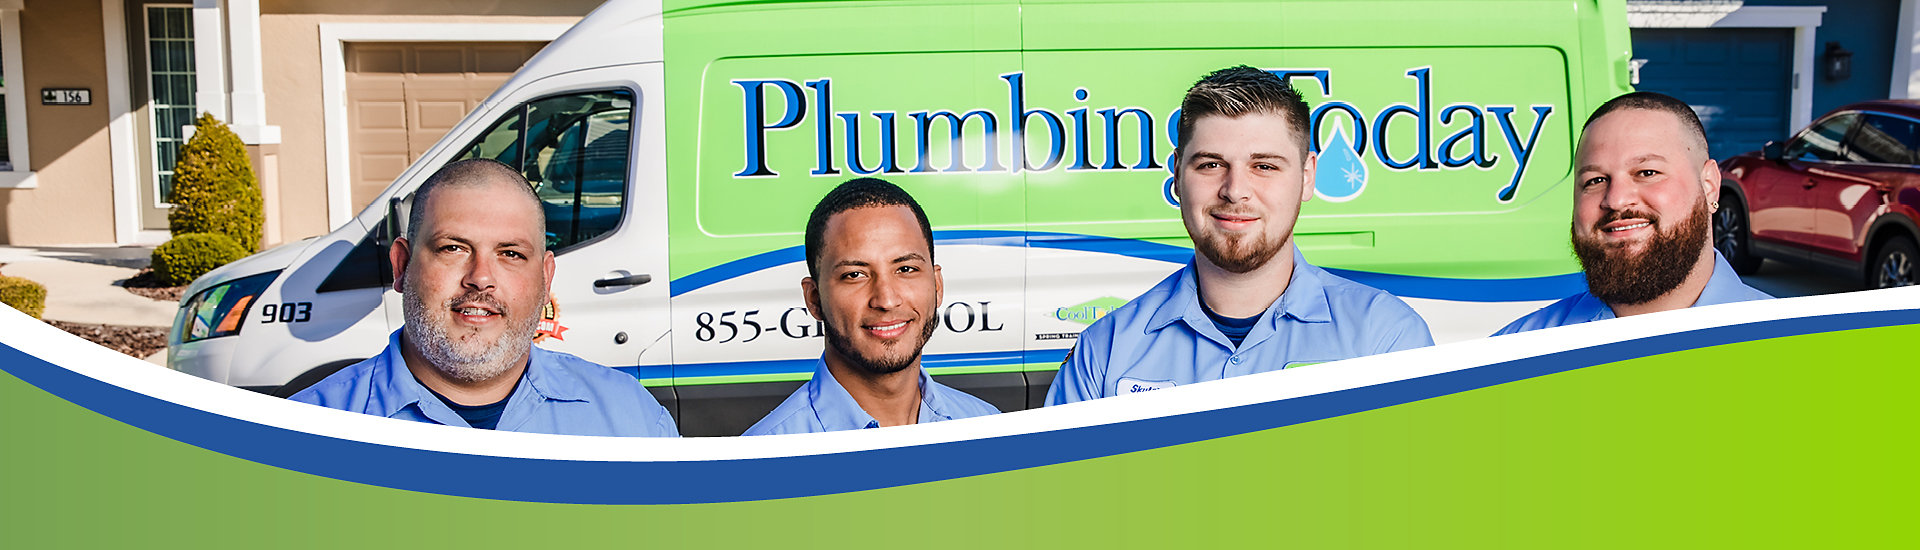 Plumbing Today plumbers in Tampa